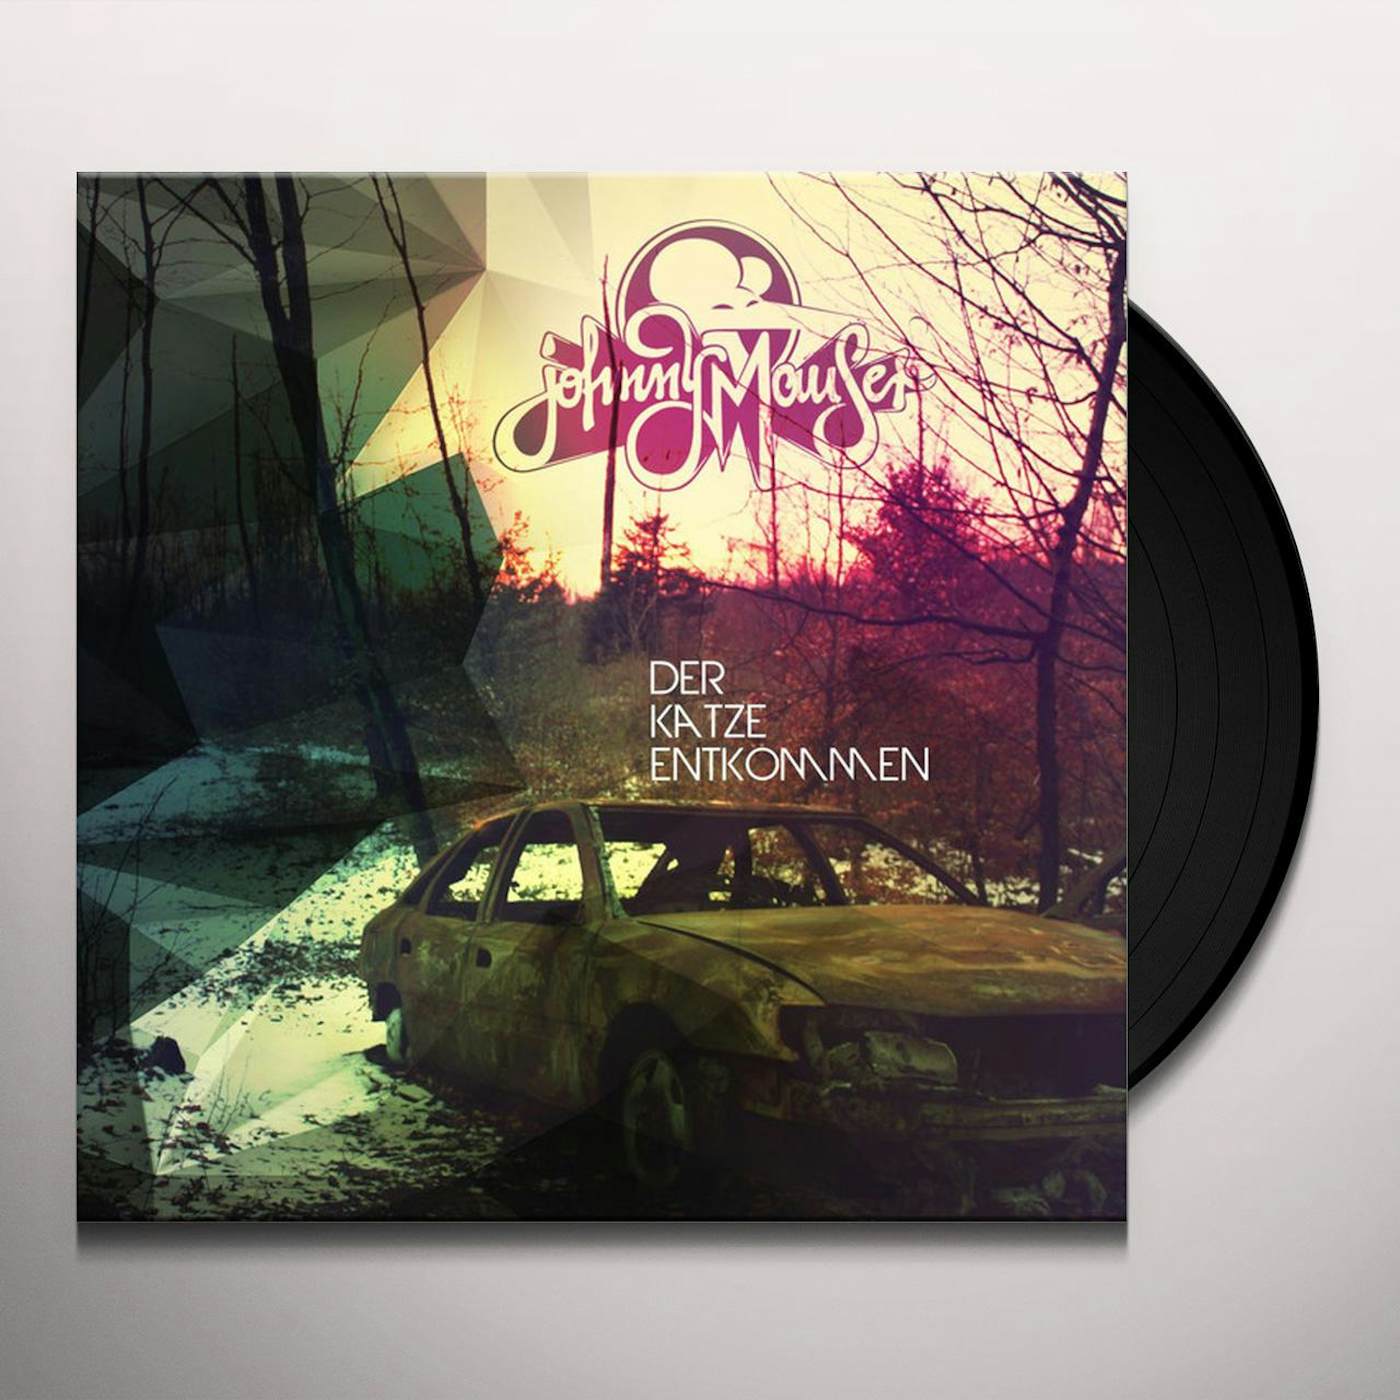 Johnny Mauser Der Katze entkommen Vinyl Record